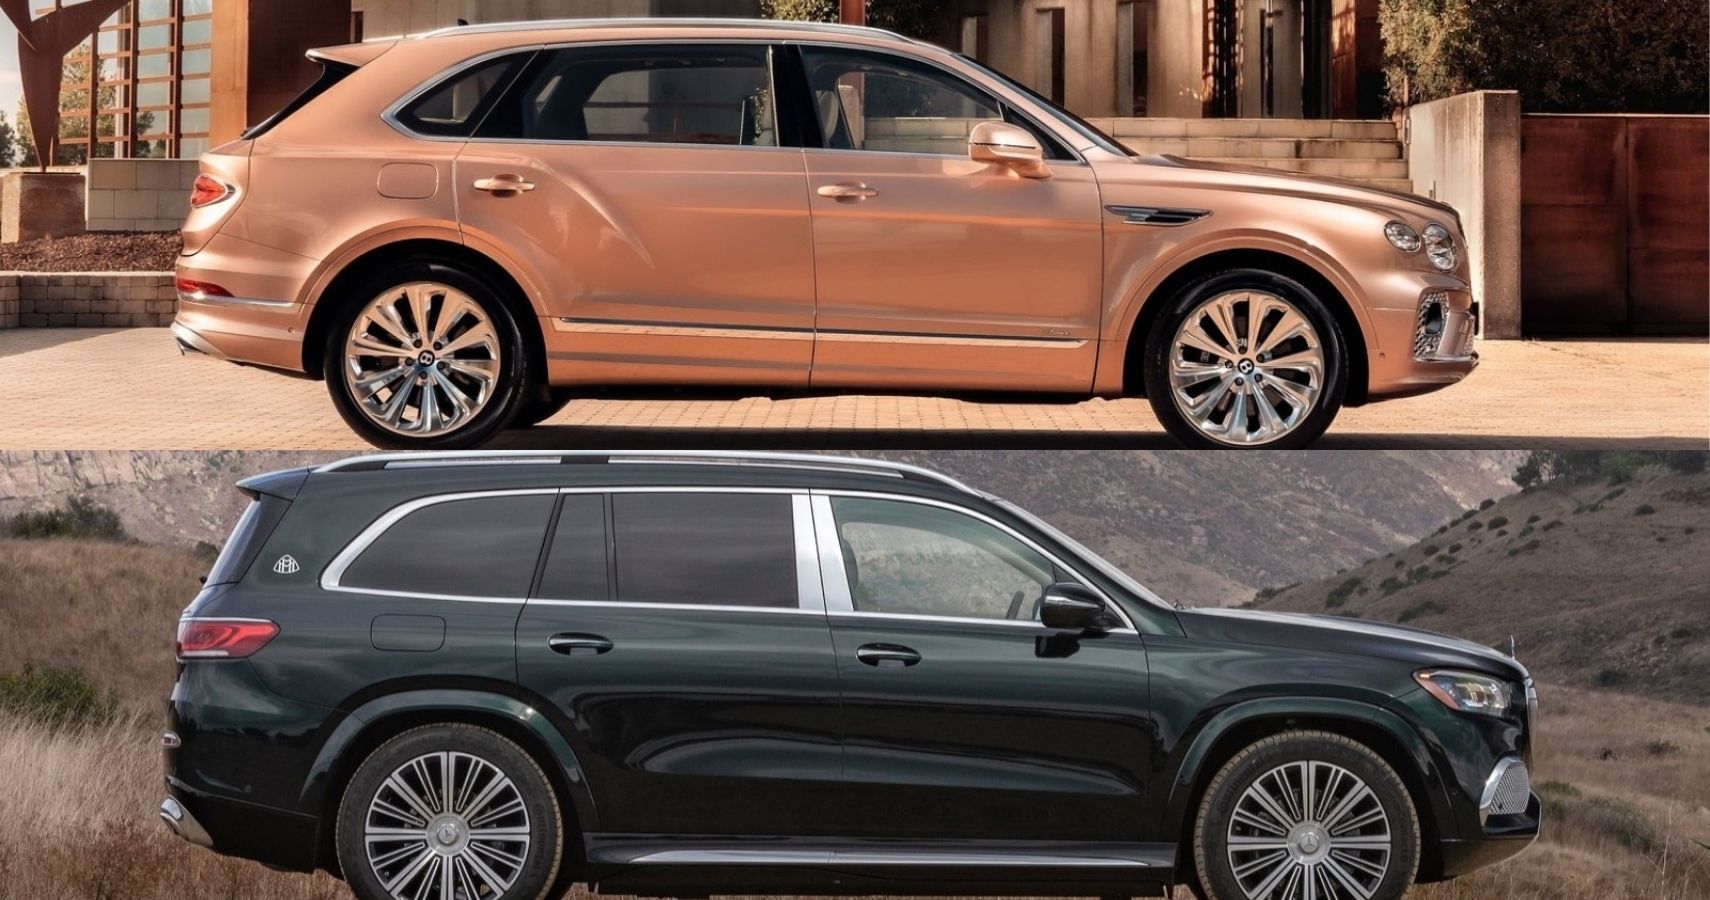 Bentley Bentayga EWB and Mercedes-Maybach GLS side view comparison